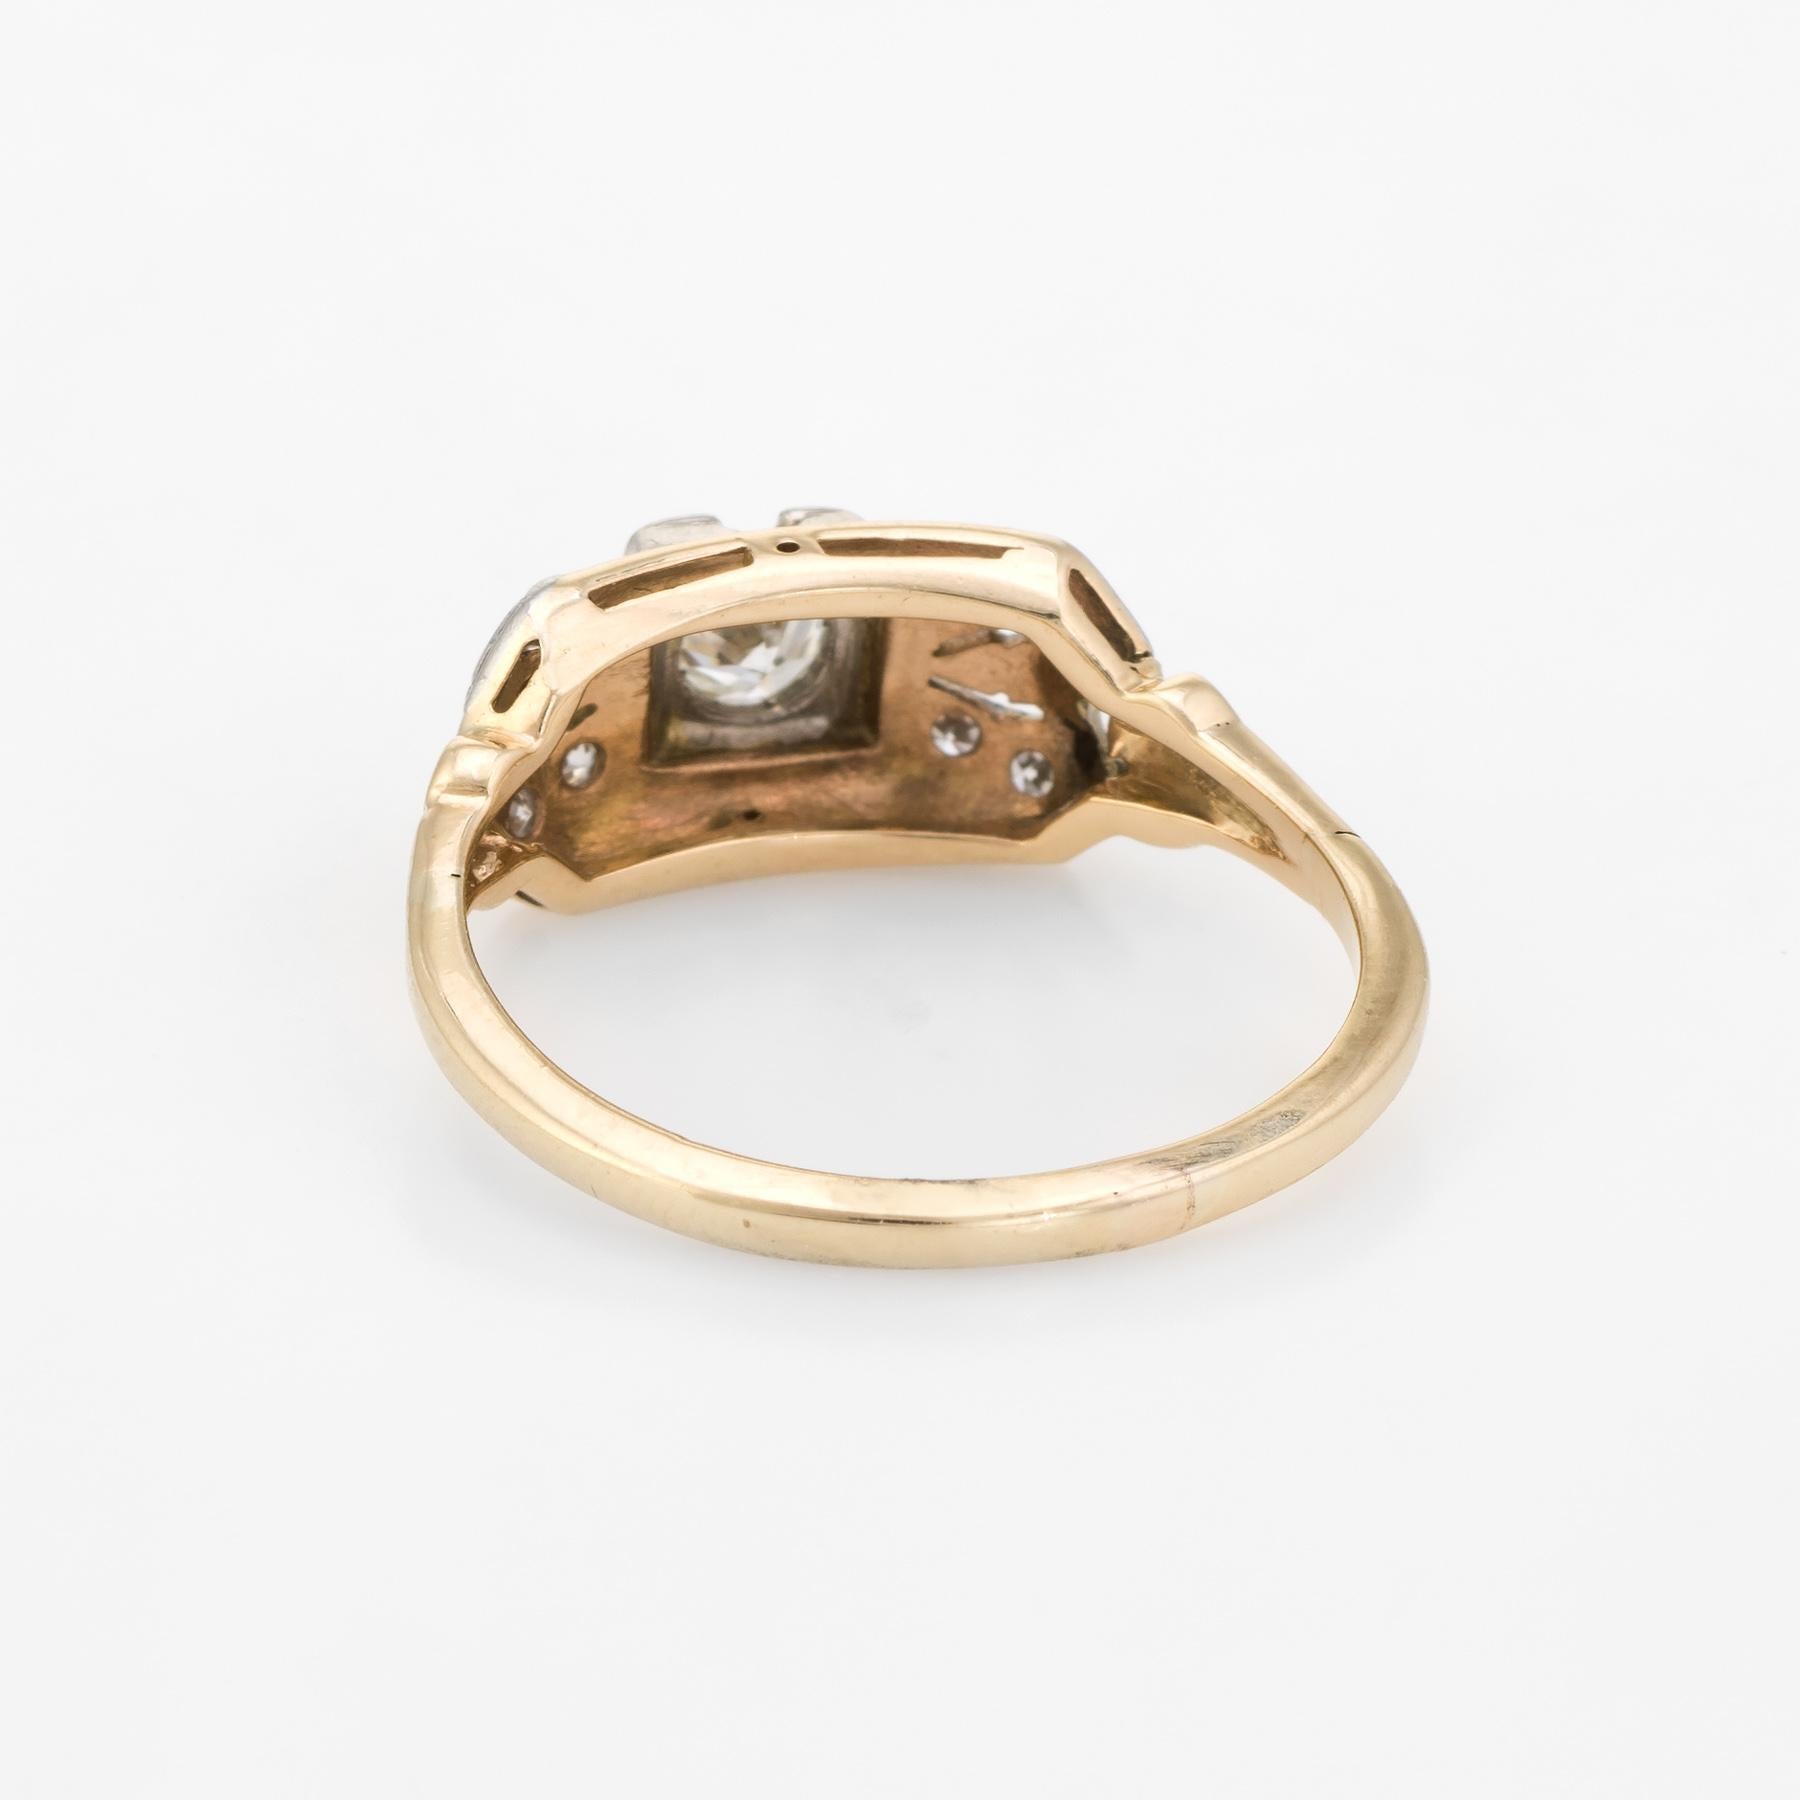 Women's Antique Diamond Ring Art Deco 14 Karat Gold Two-Tone Alternative Vintage